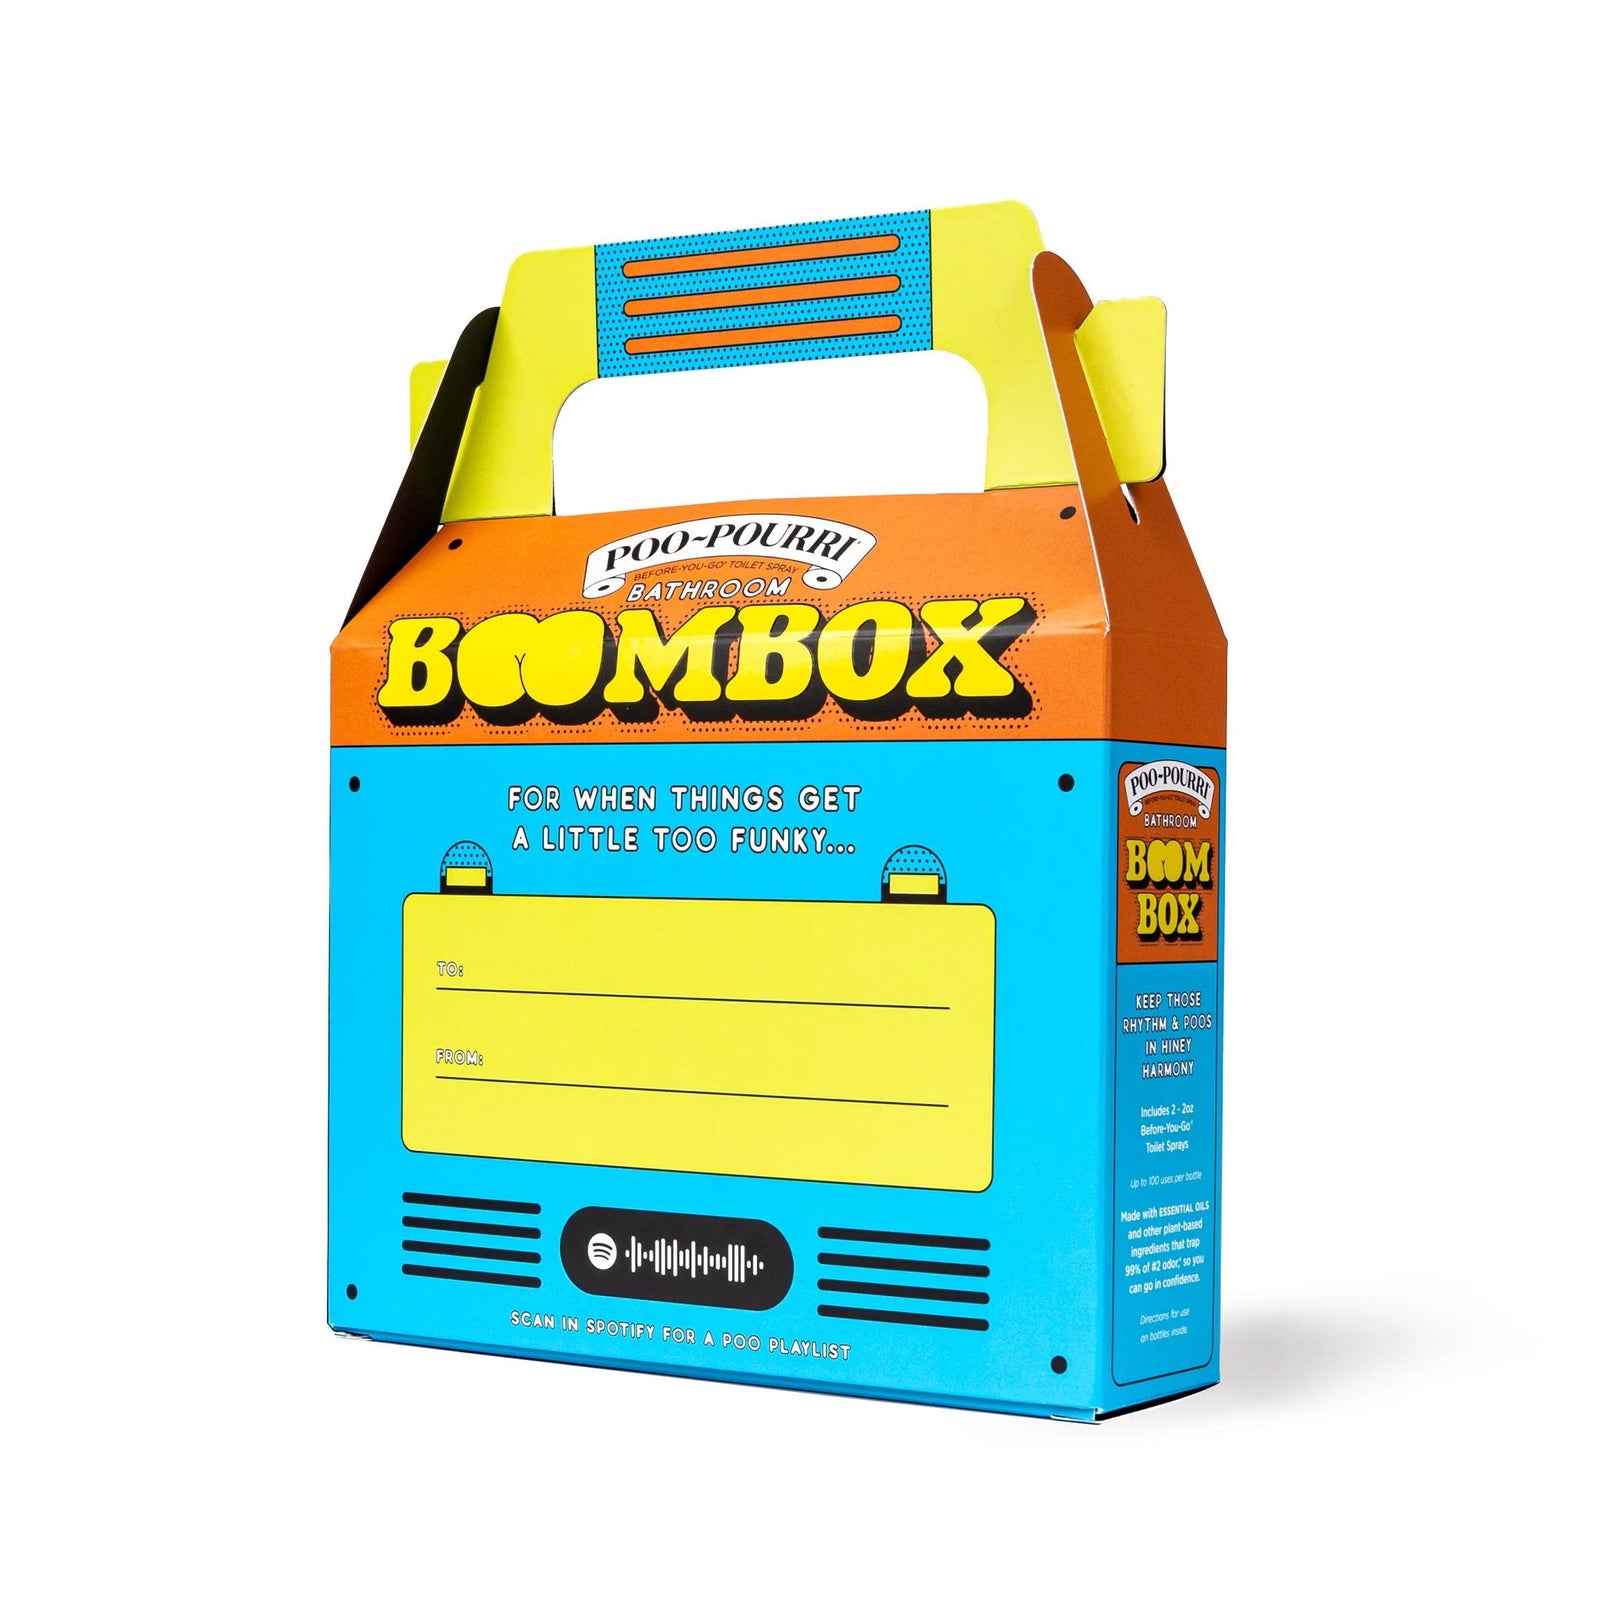 Poo~Pourri Bathroom Boombox Toilet Spray Gift Set in Original Citrus + Fresh Air Scent | 2 Bathroom Sprays